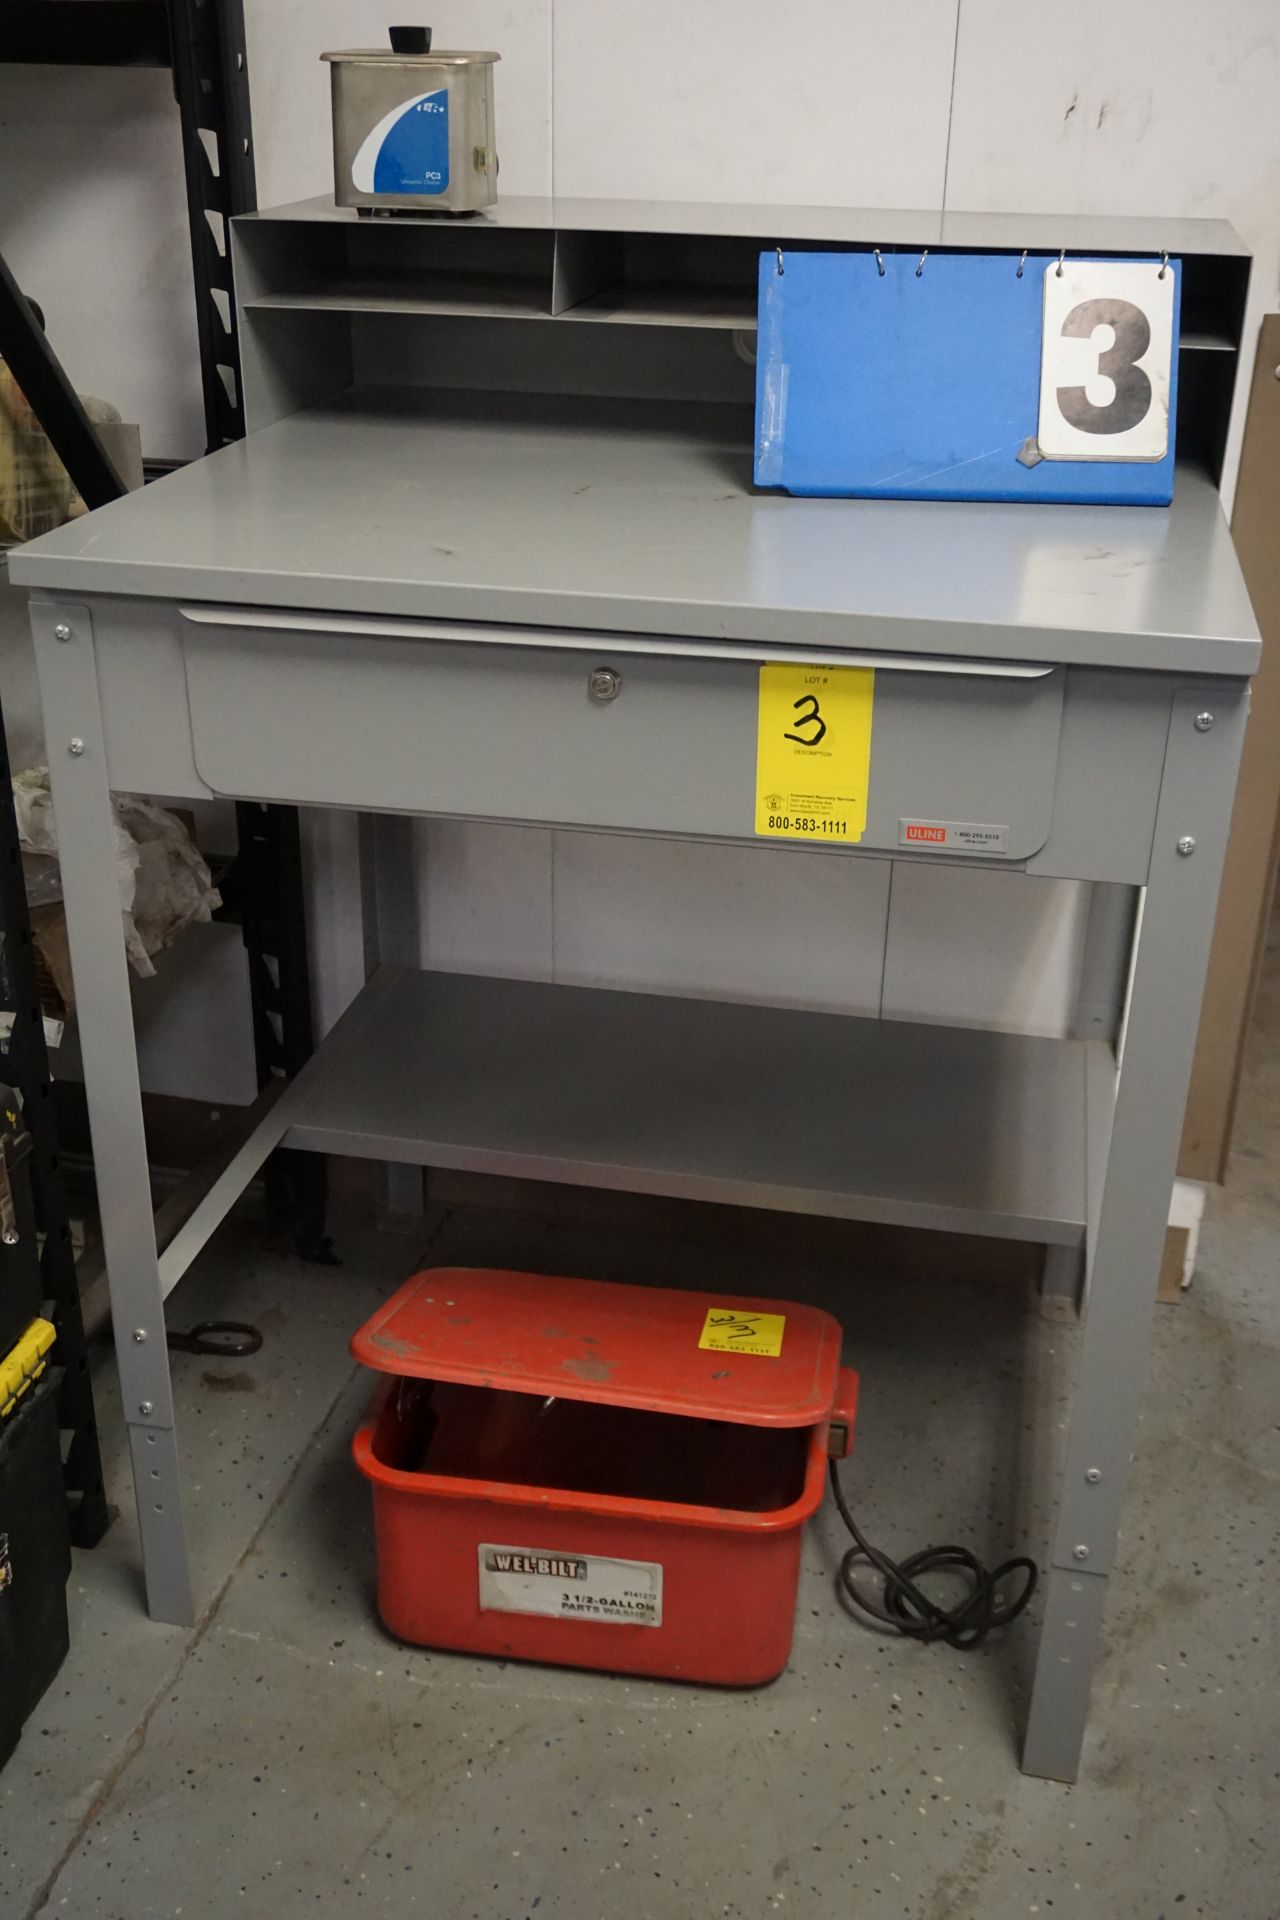 Shop Desk, 3 1/2 Gallon Parts Washer, Small Ultrasonic Parts Washer (LOCATION: 3421 N Sylvania